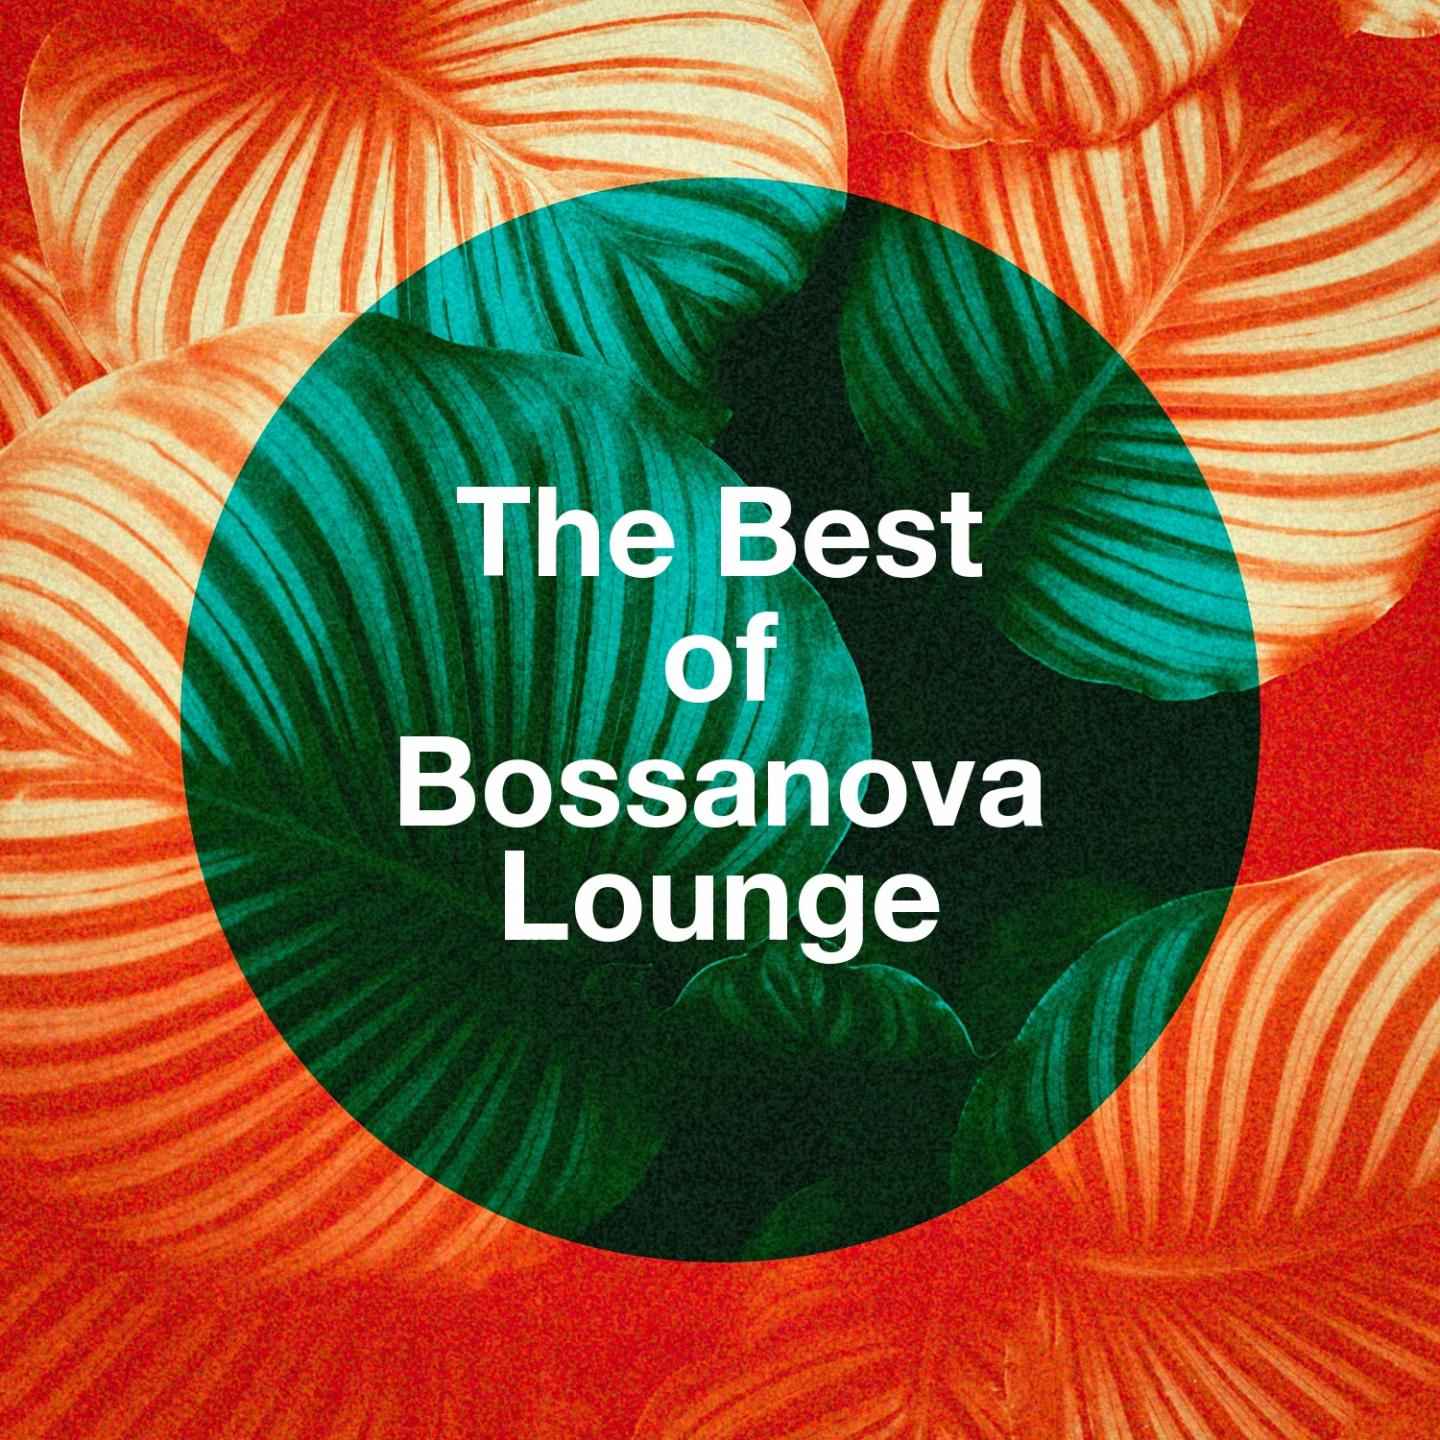 The Best of Bossanova Lounge